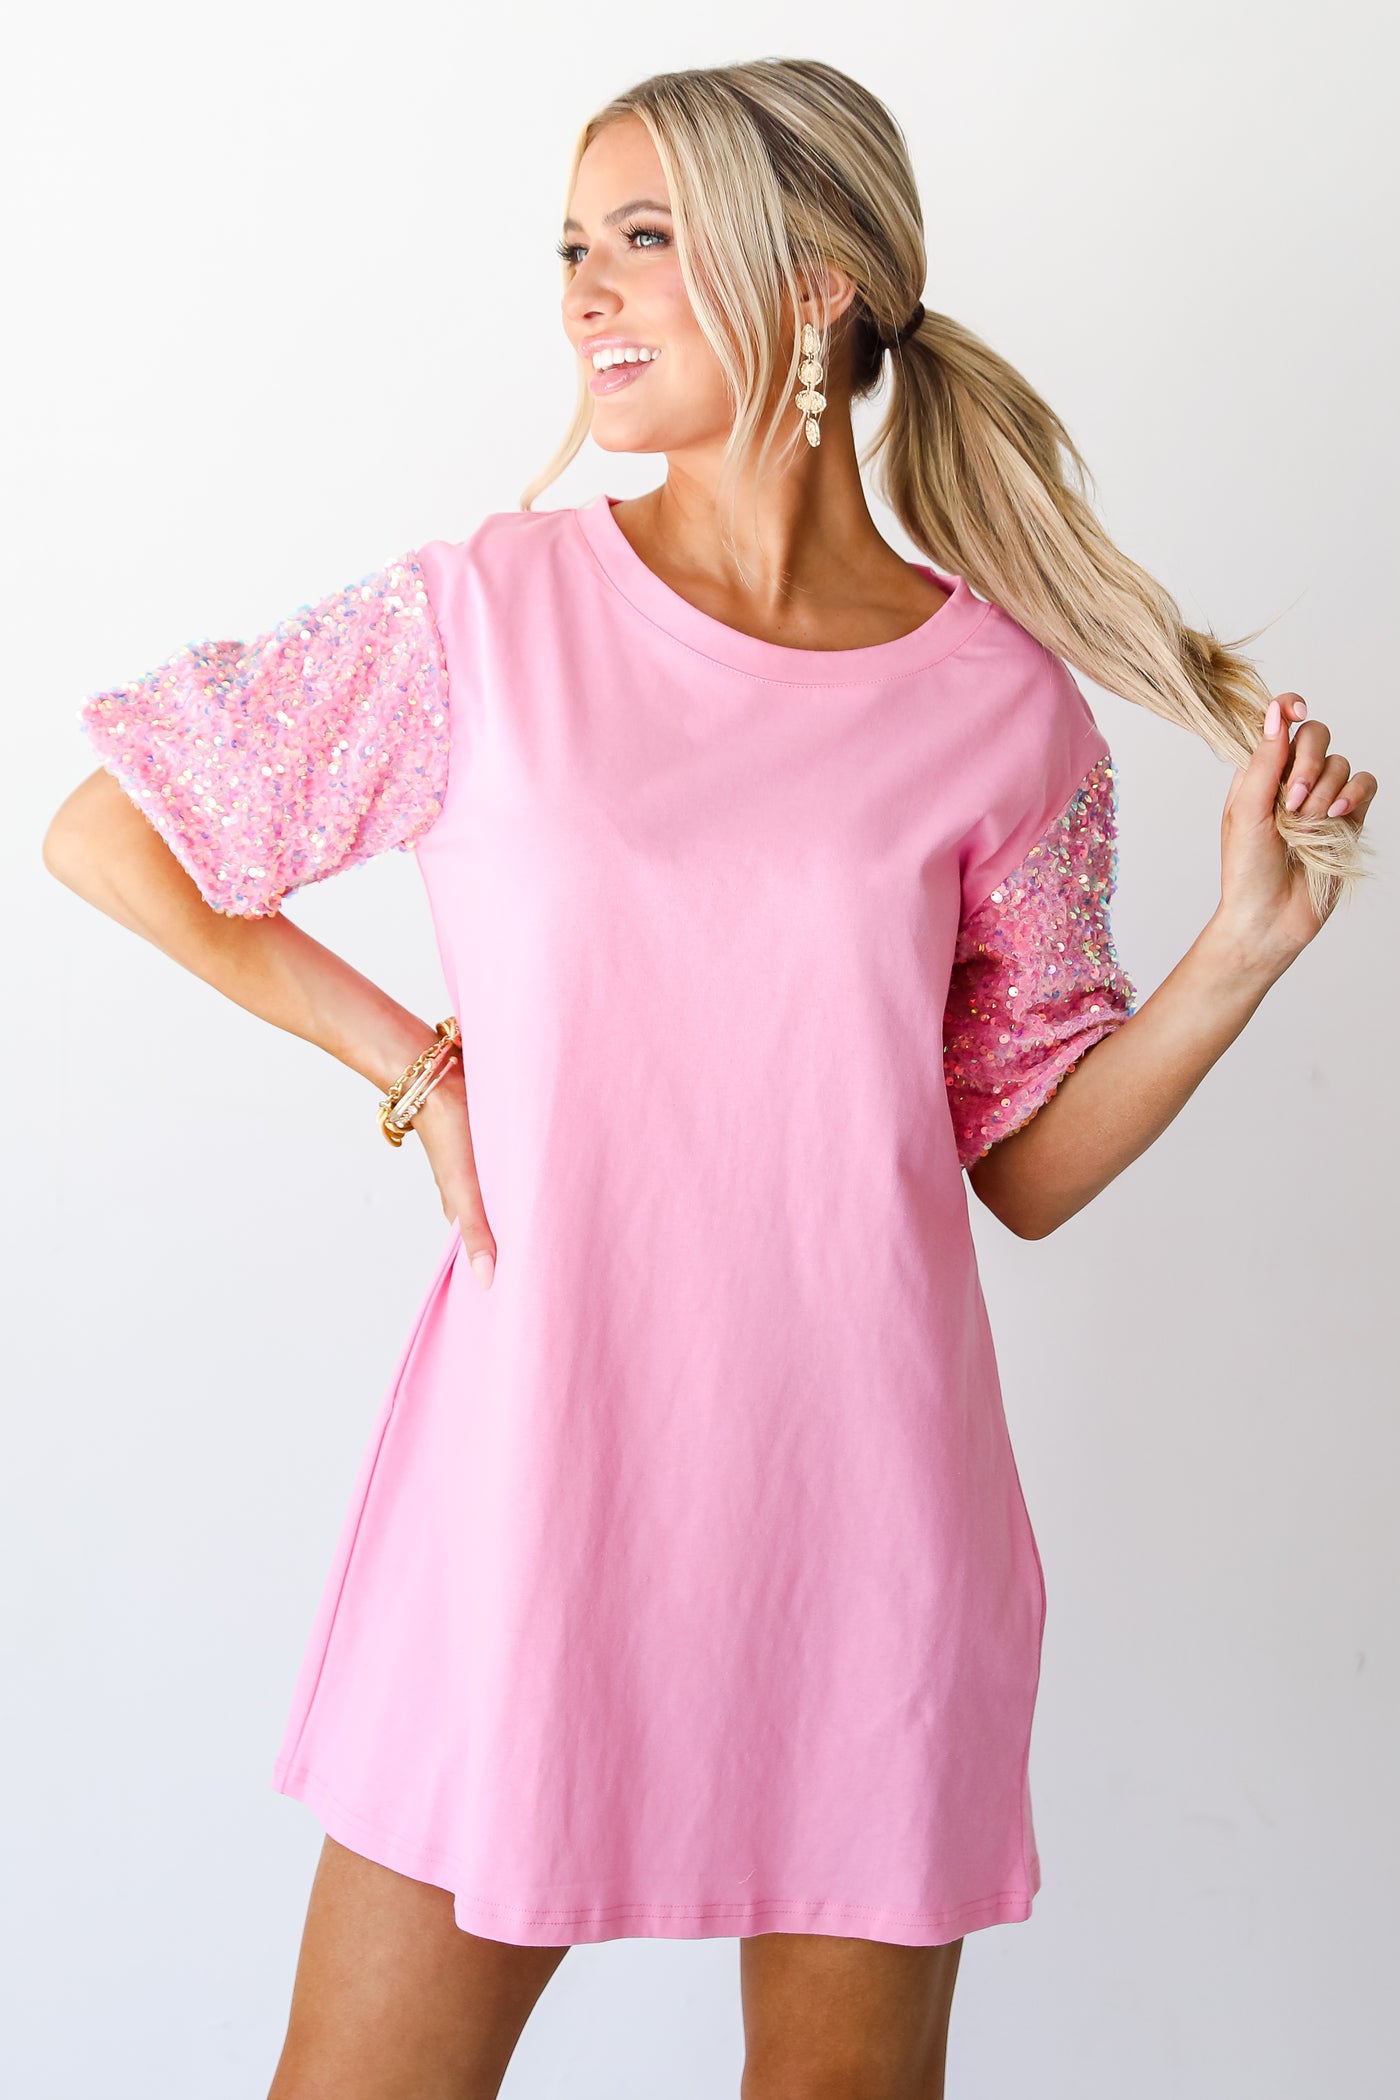 pink Sequin Sleeve Mini Dress on dress up model